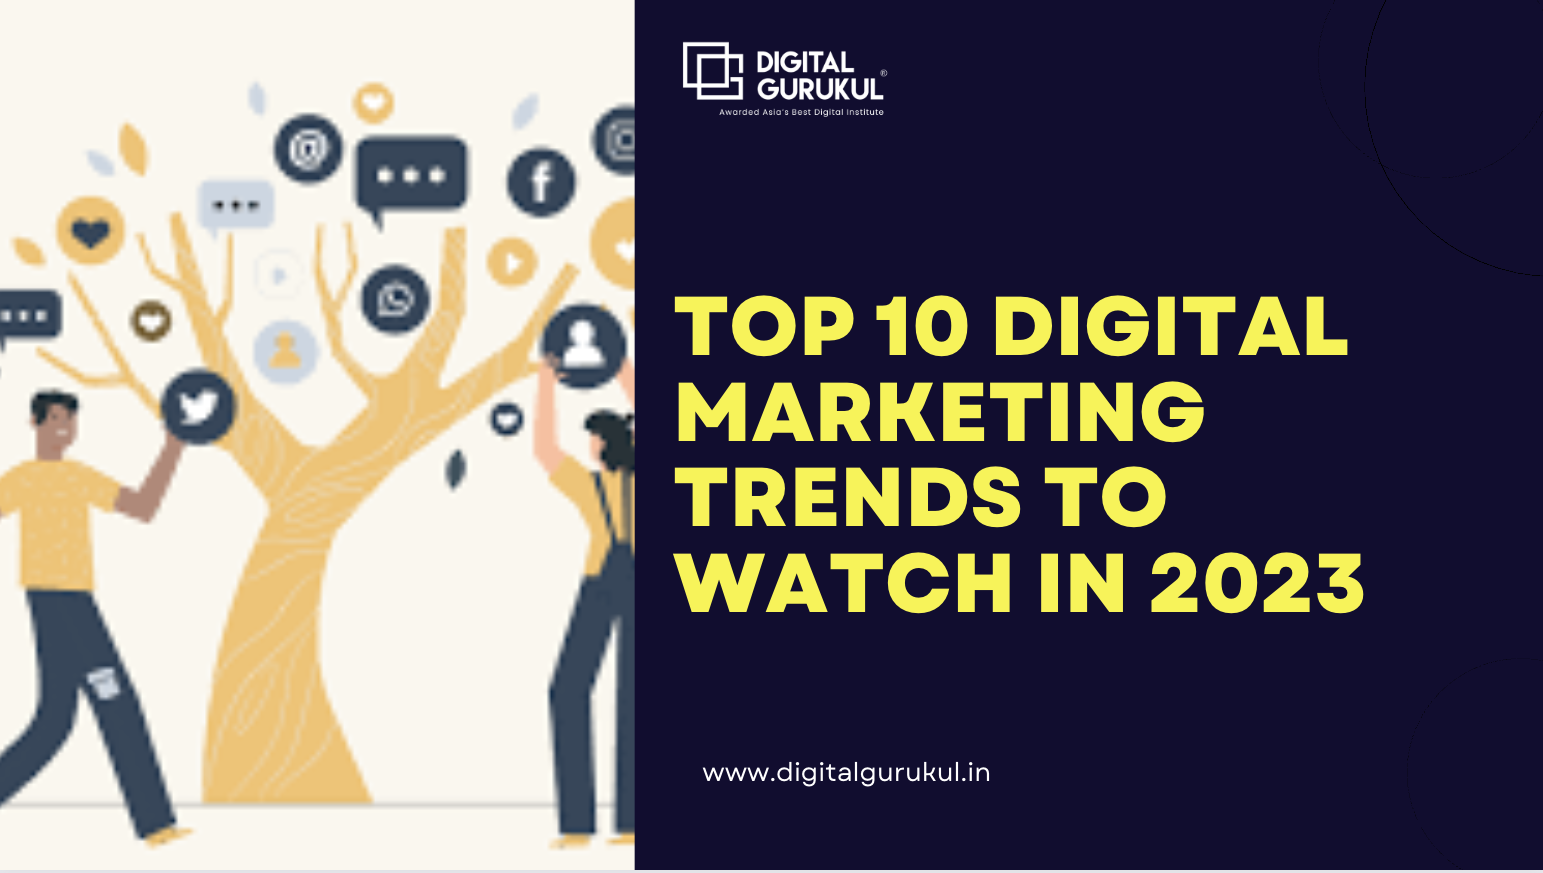 Top 10 Digital Marketing Trends to Watch in 2023